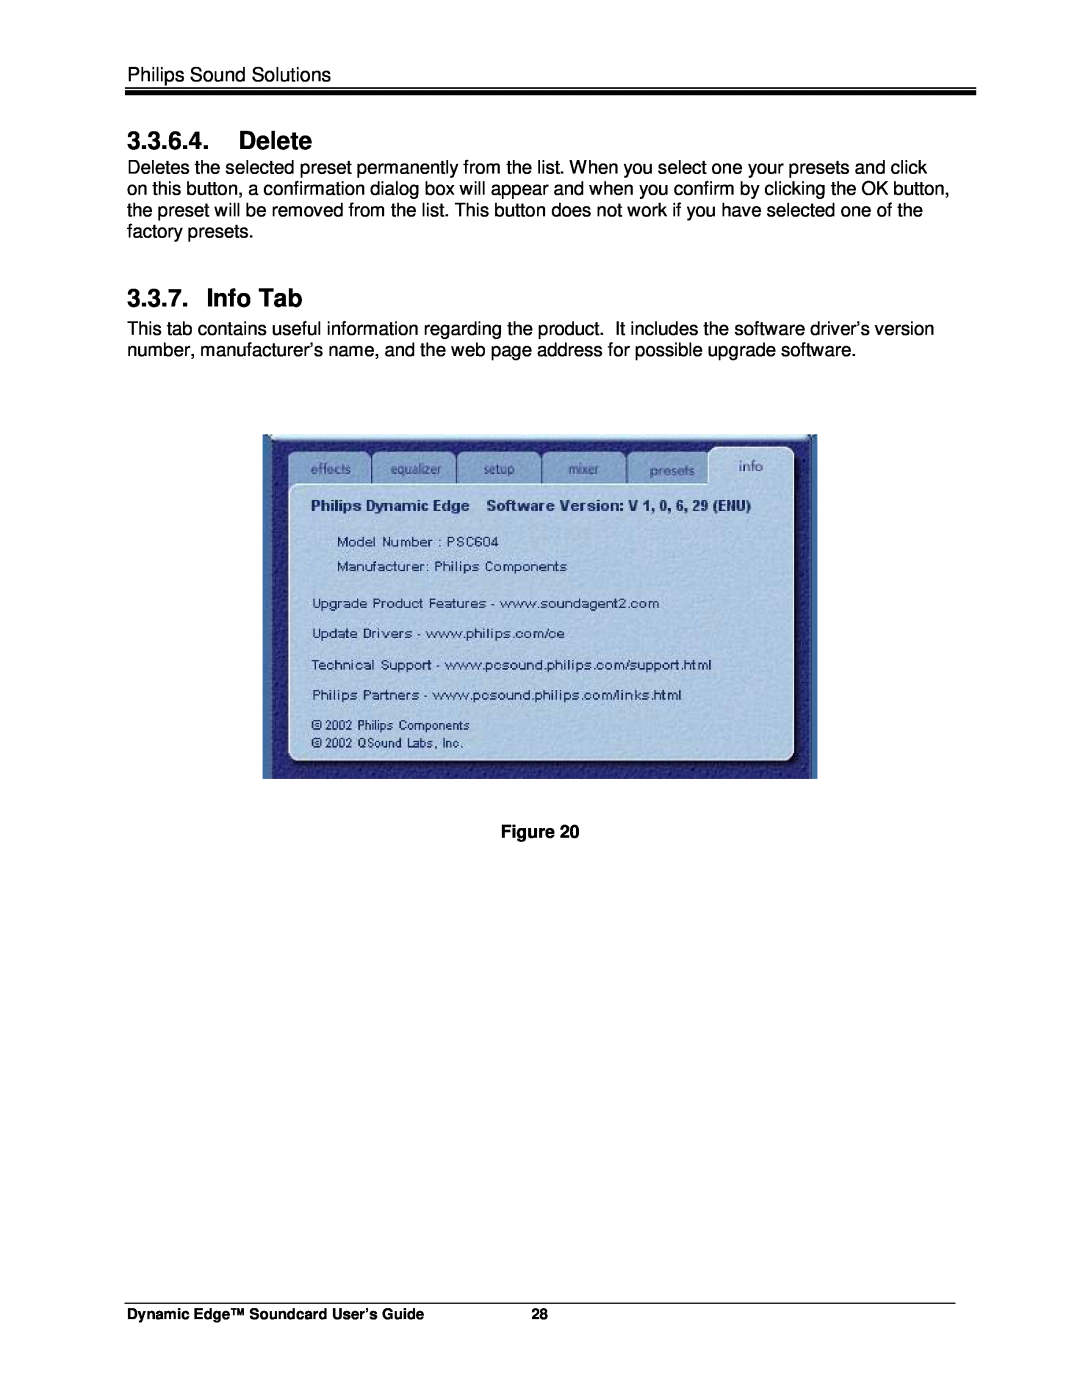 Philips PSC604 manual Delete, Info Tab 